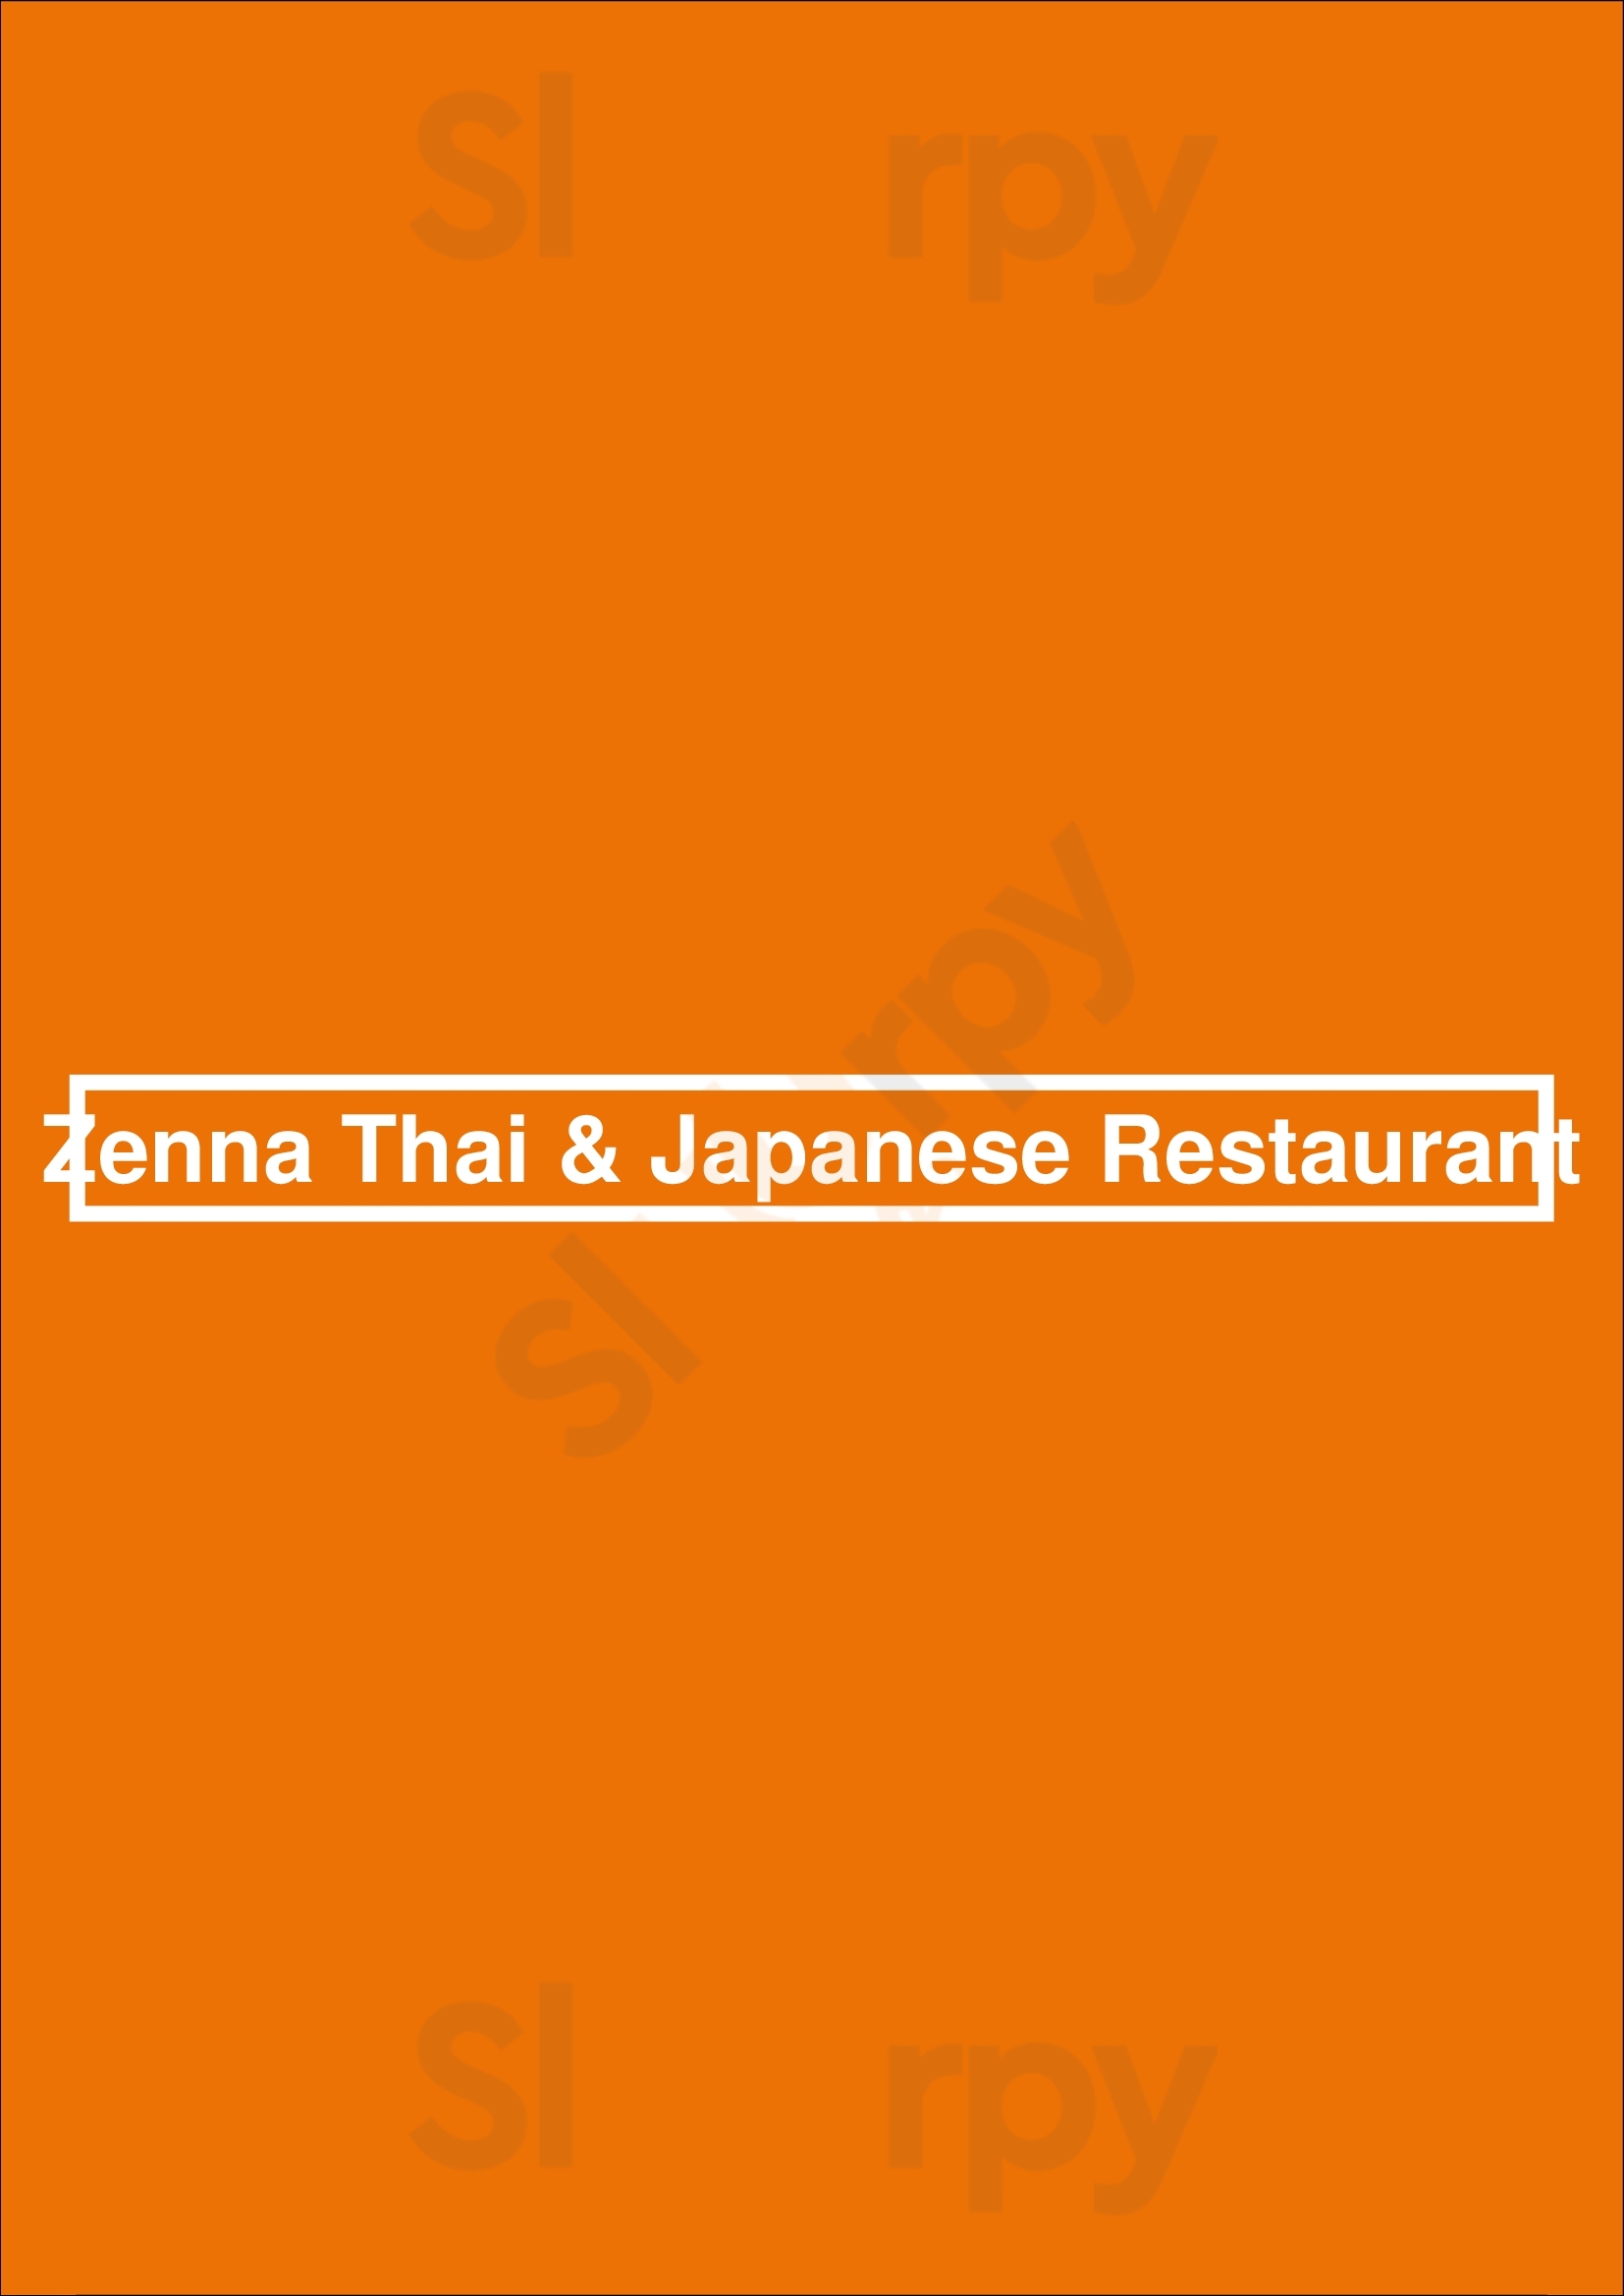 Zenna Thai & Japanese Restaurant Plano Menu - 1